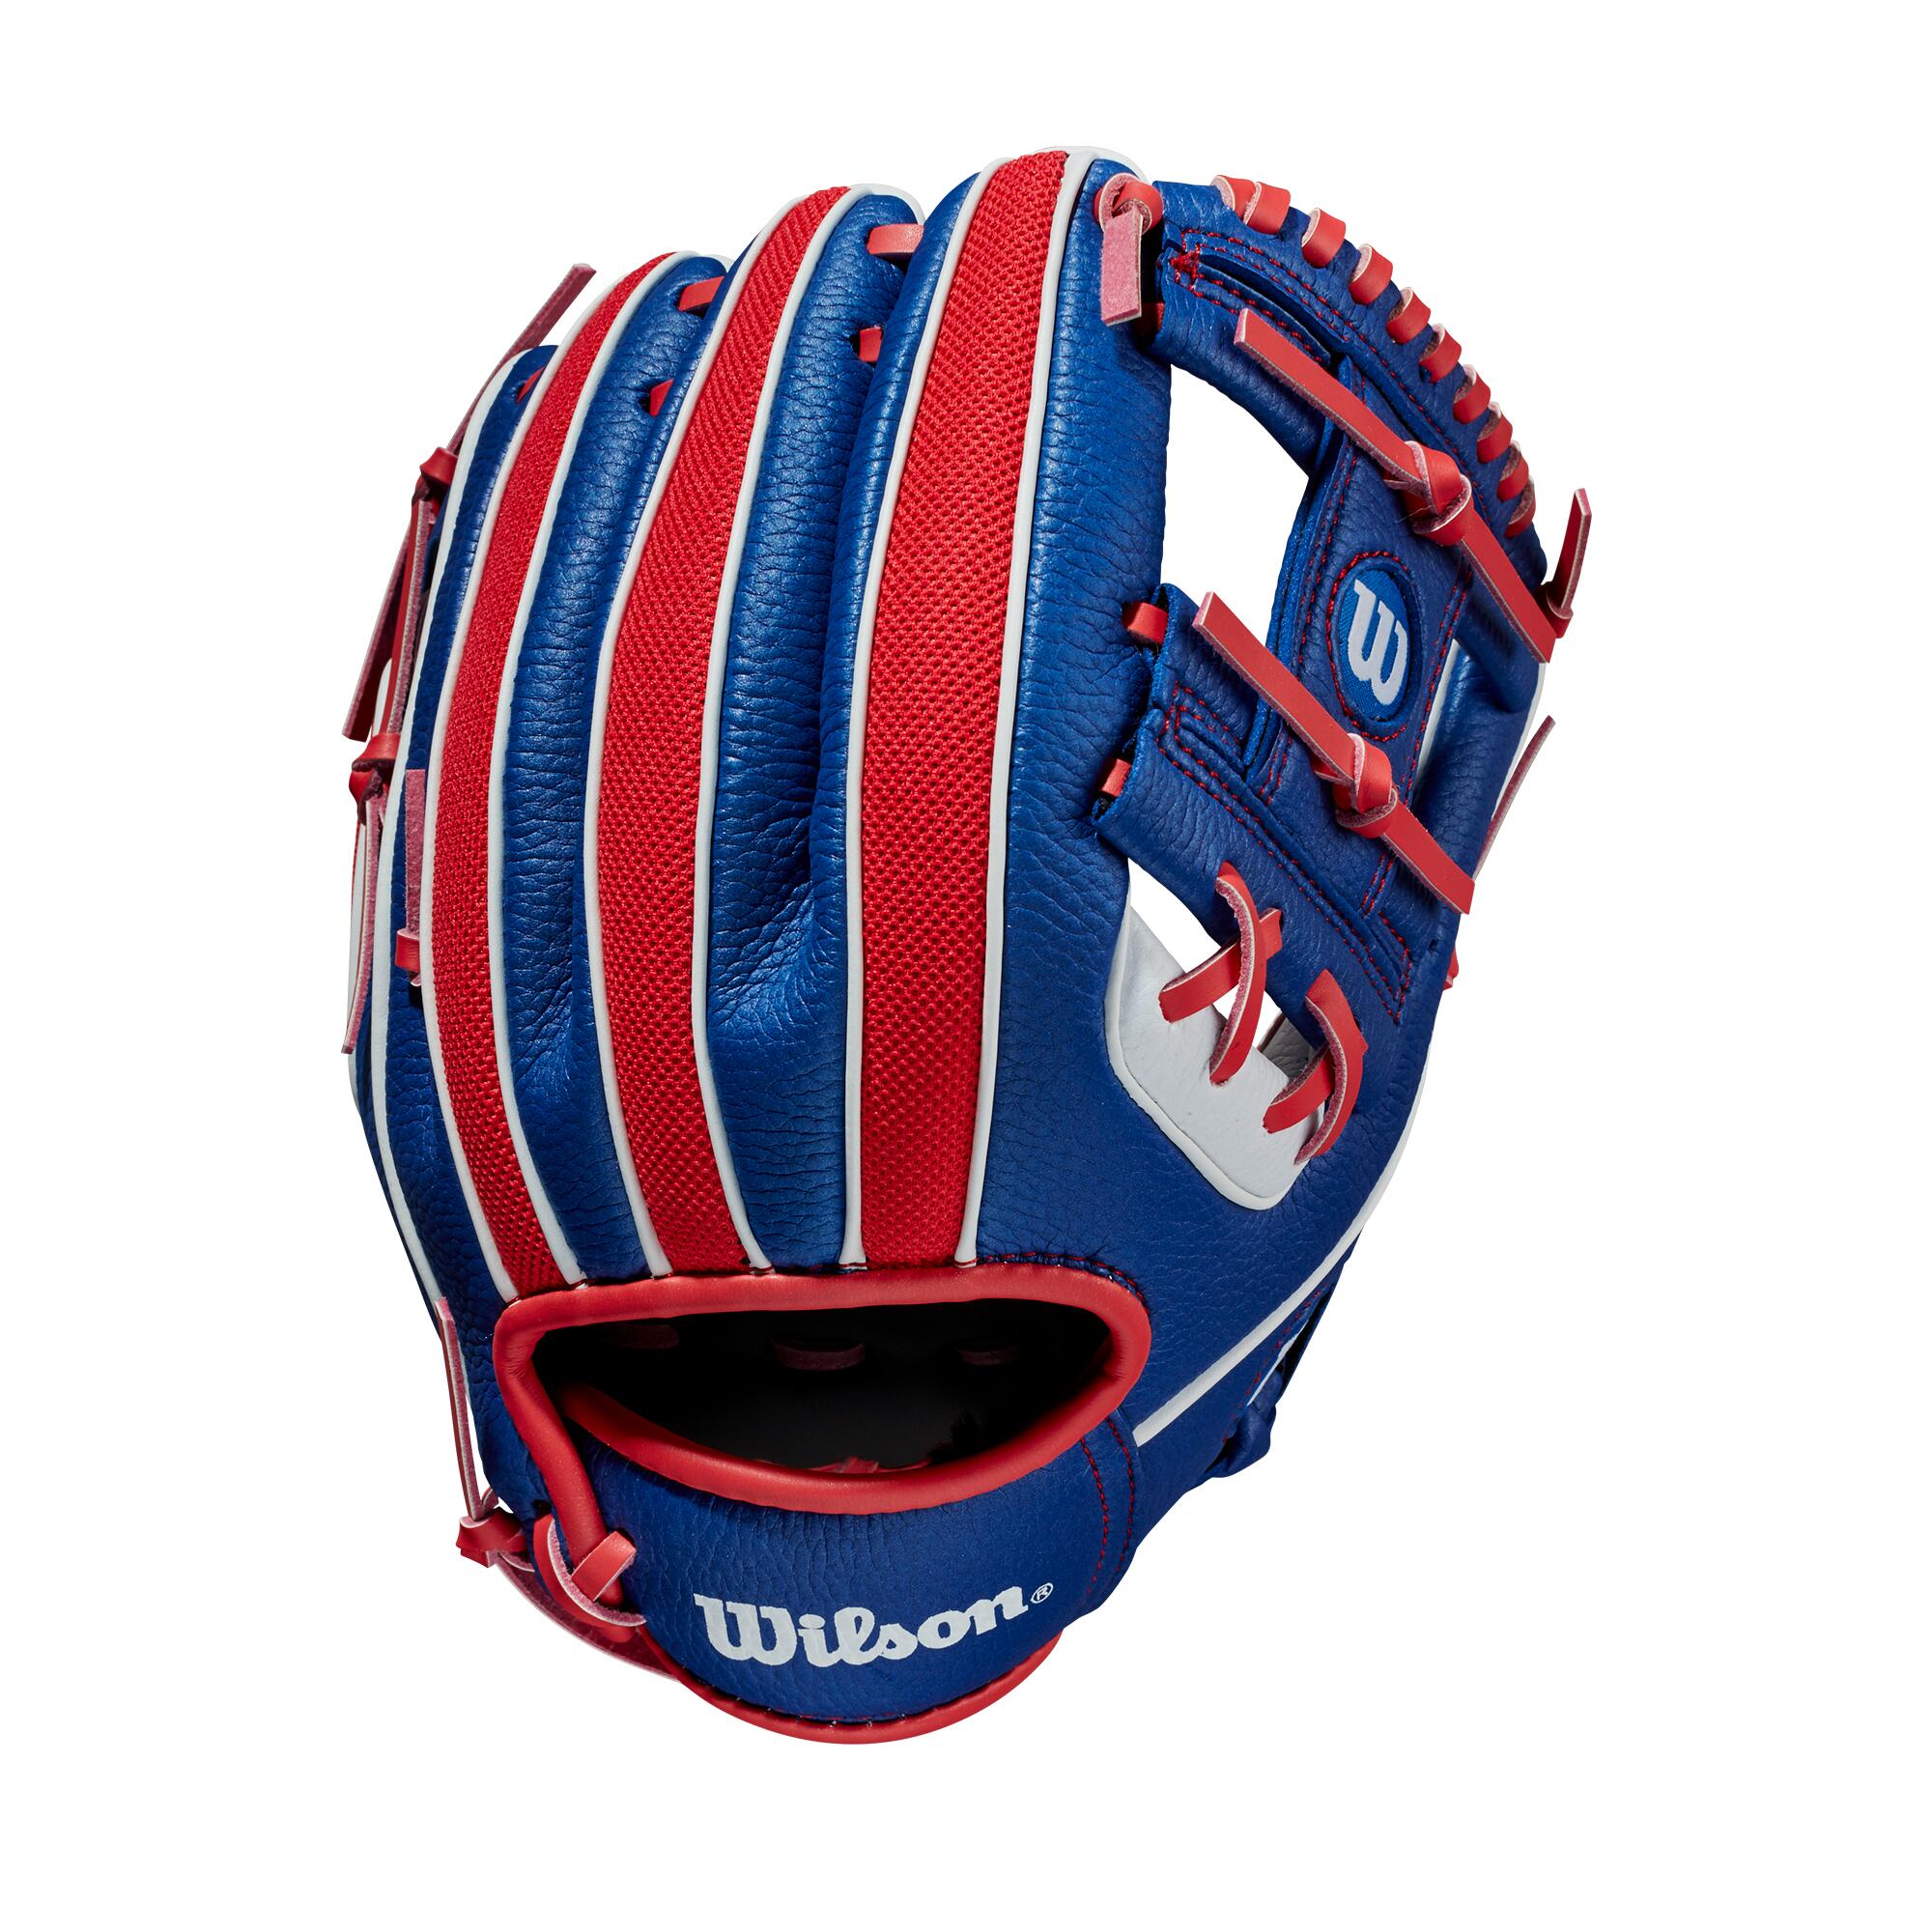 Wilson A200 Junior 10in Baseball Glove - Ry / Rd / Wh 2/5